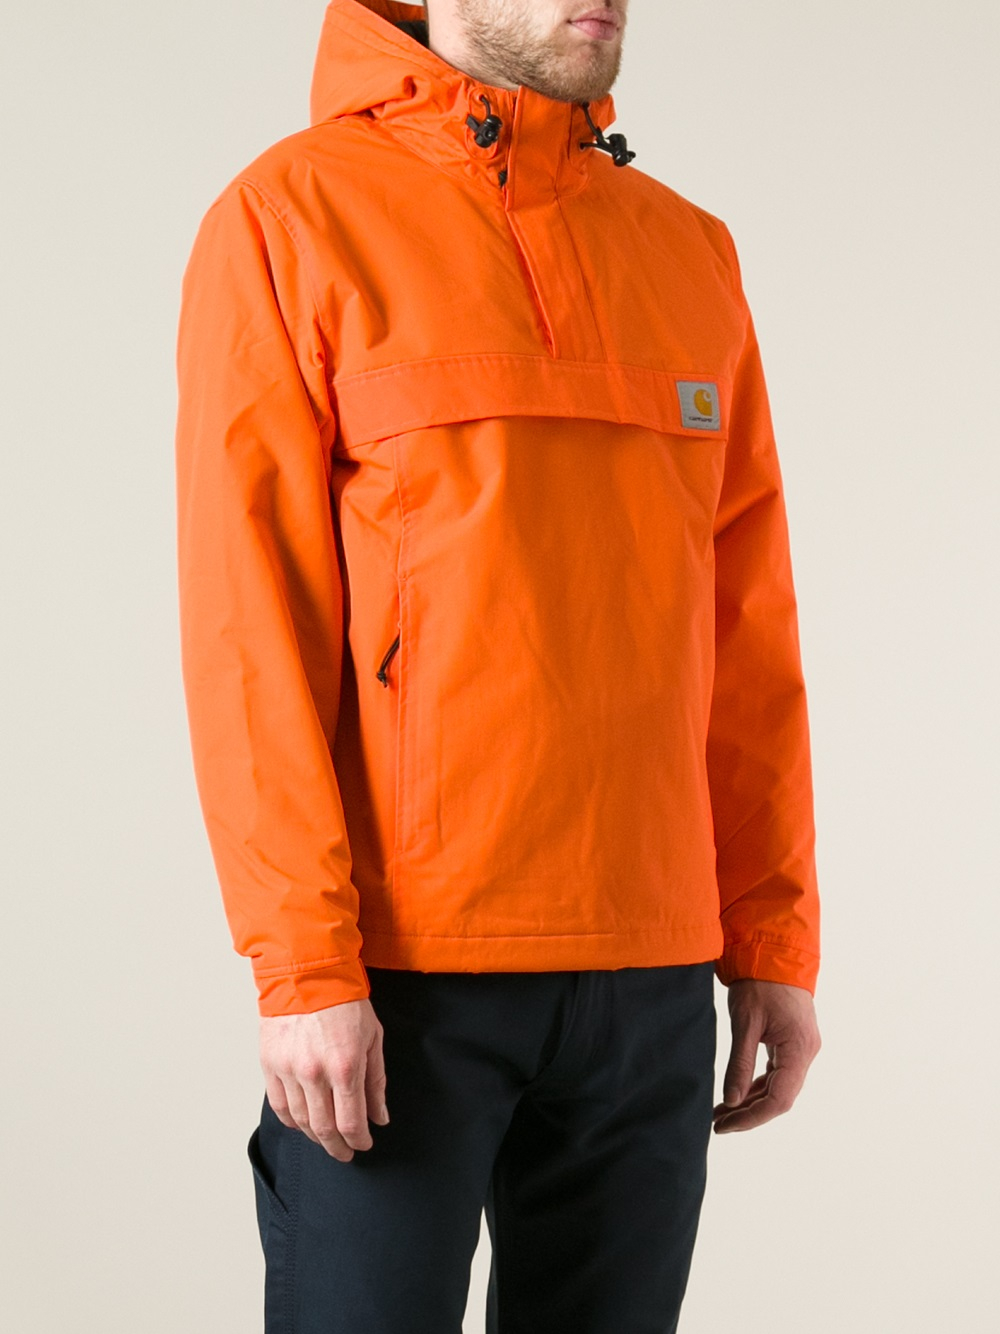 Carhartt Nimbus Pullover Jacket in Yellow & Orange (Orange) for 